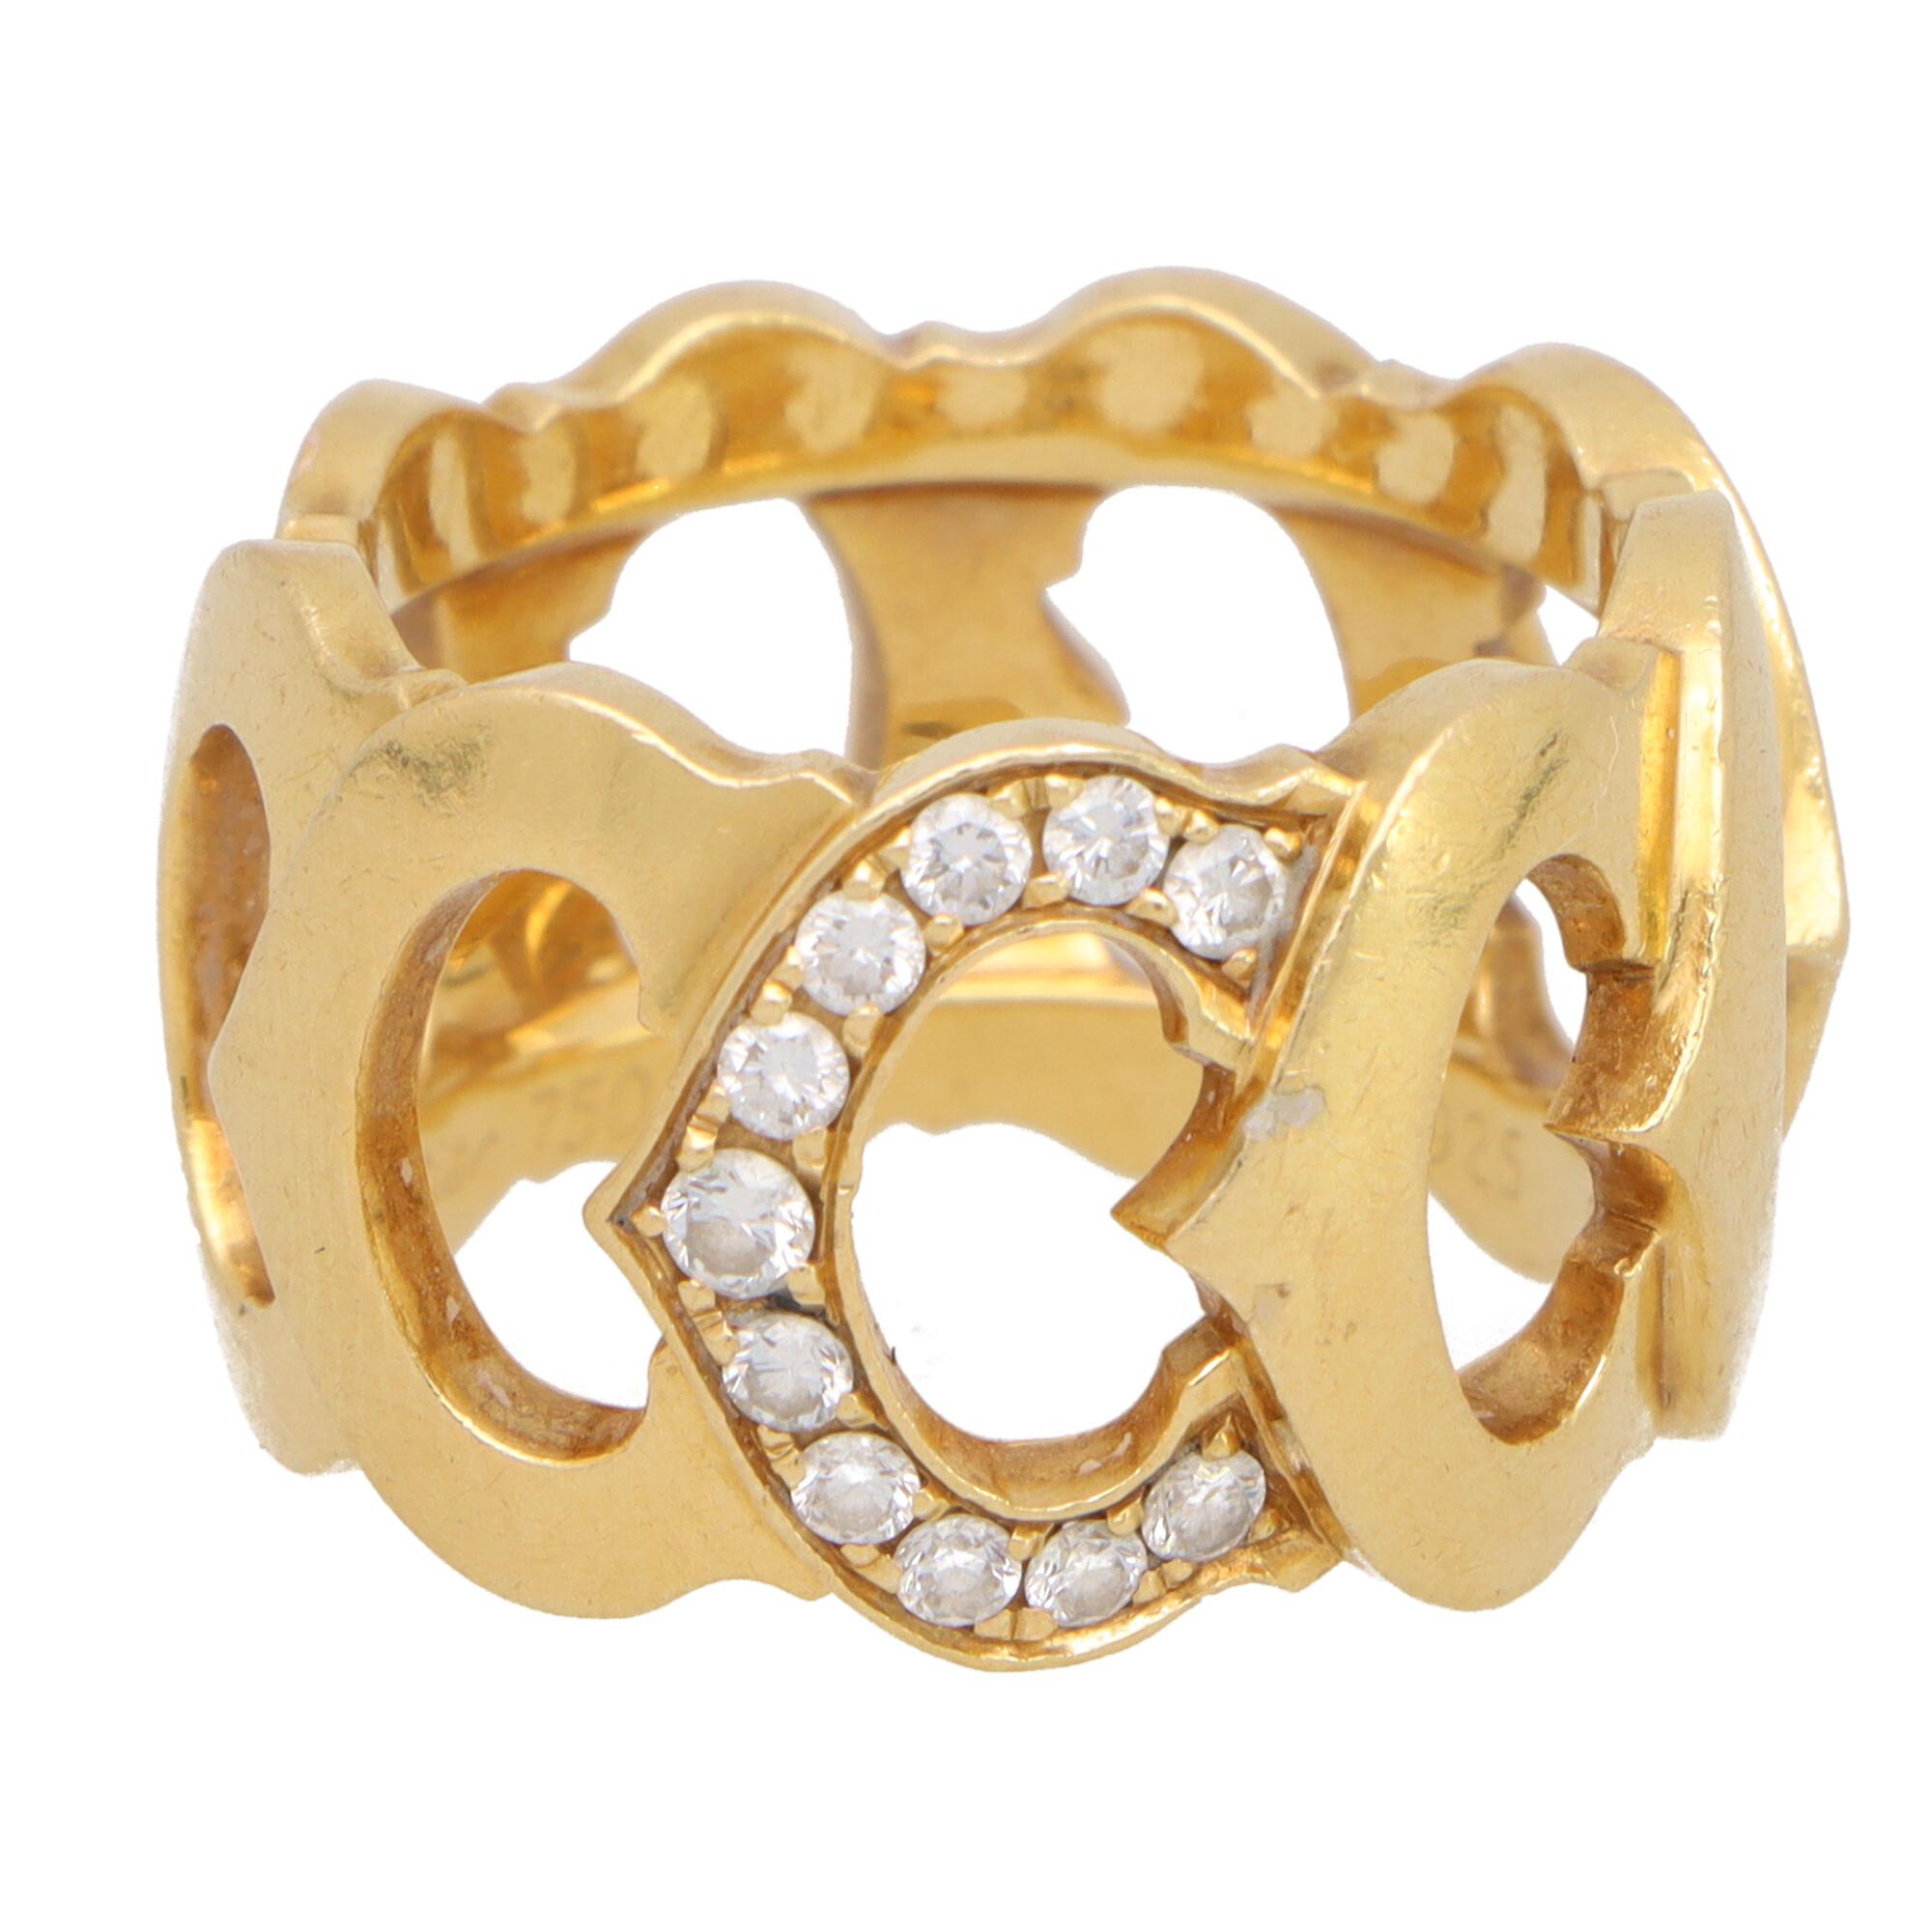 Round Cut Vintage Cartier ‘C de Cartier’ Diamond Band Ring in 18k Yellow Gold